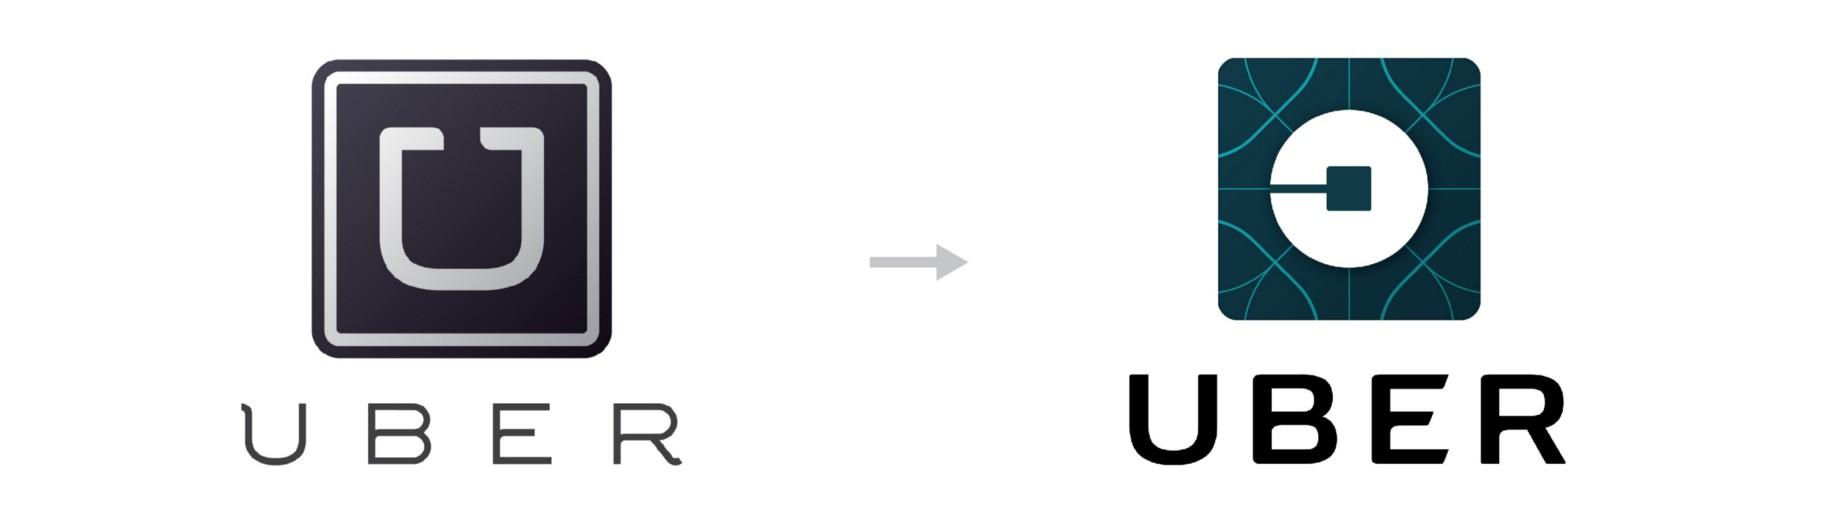 Ber Logo - A Closer Look at the 2016 Uber Redesign - Look and Logo - Medium